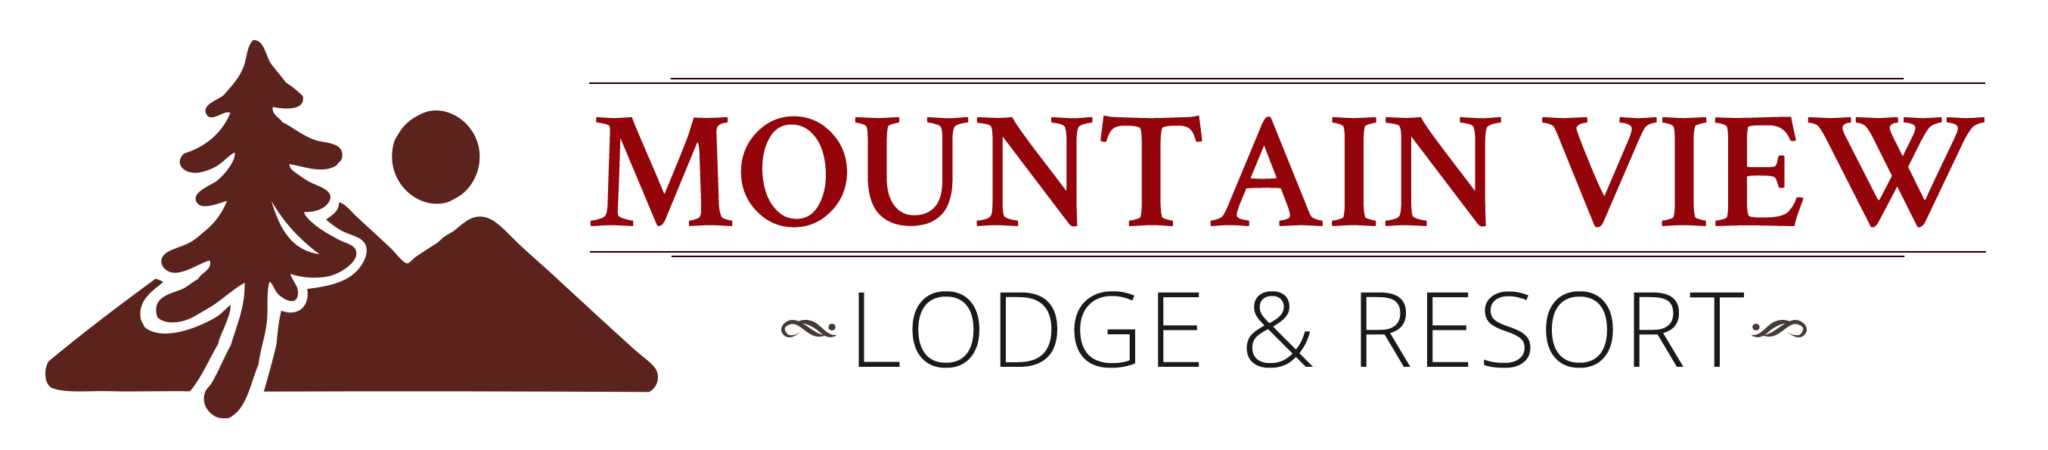 Mountain View Lodge & Resort